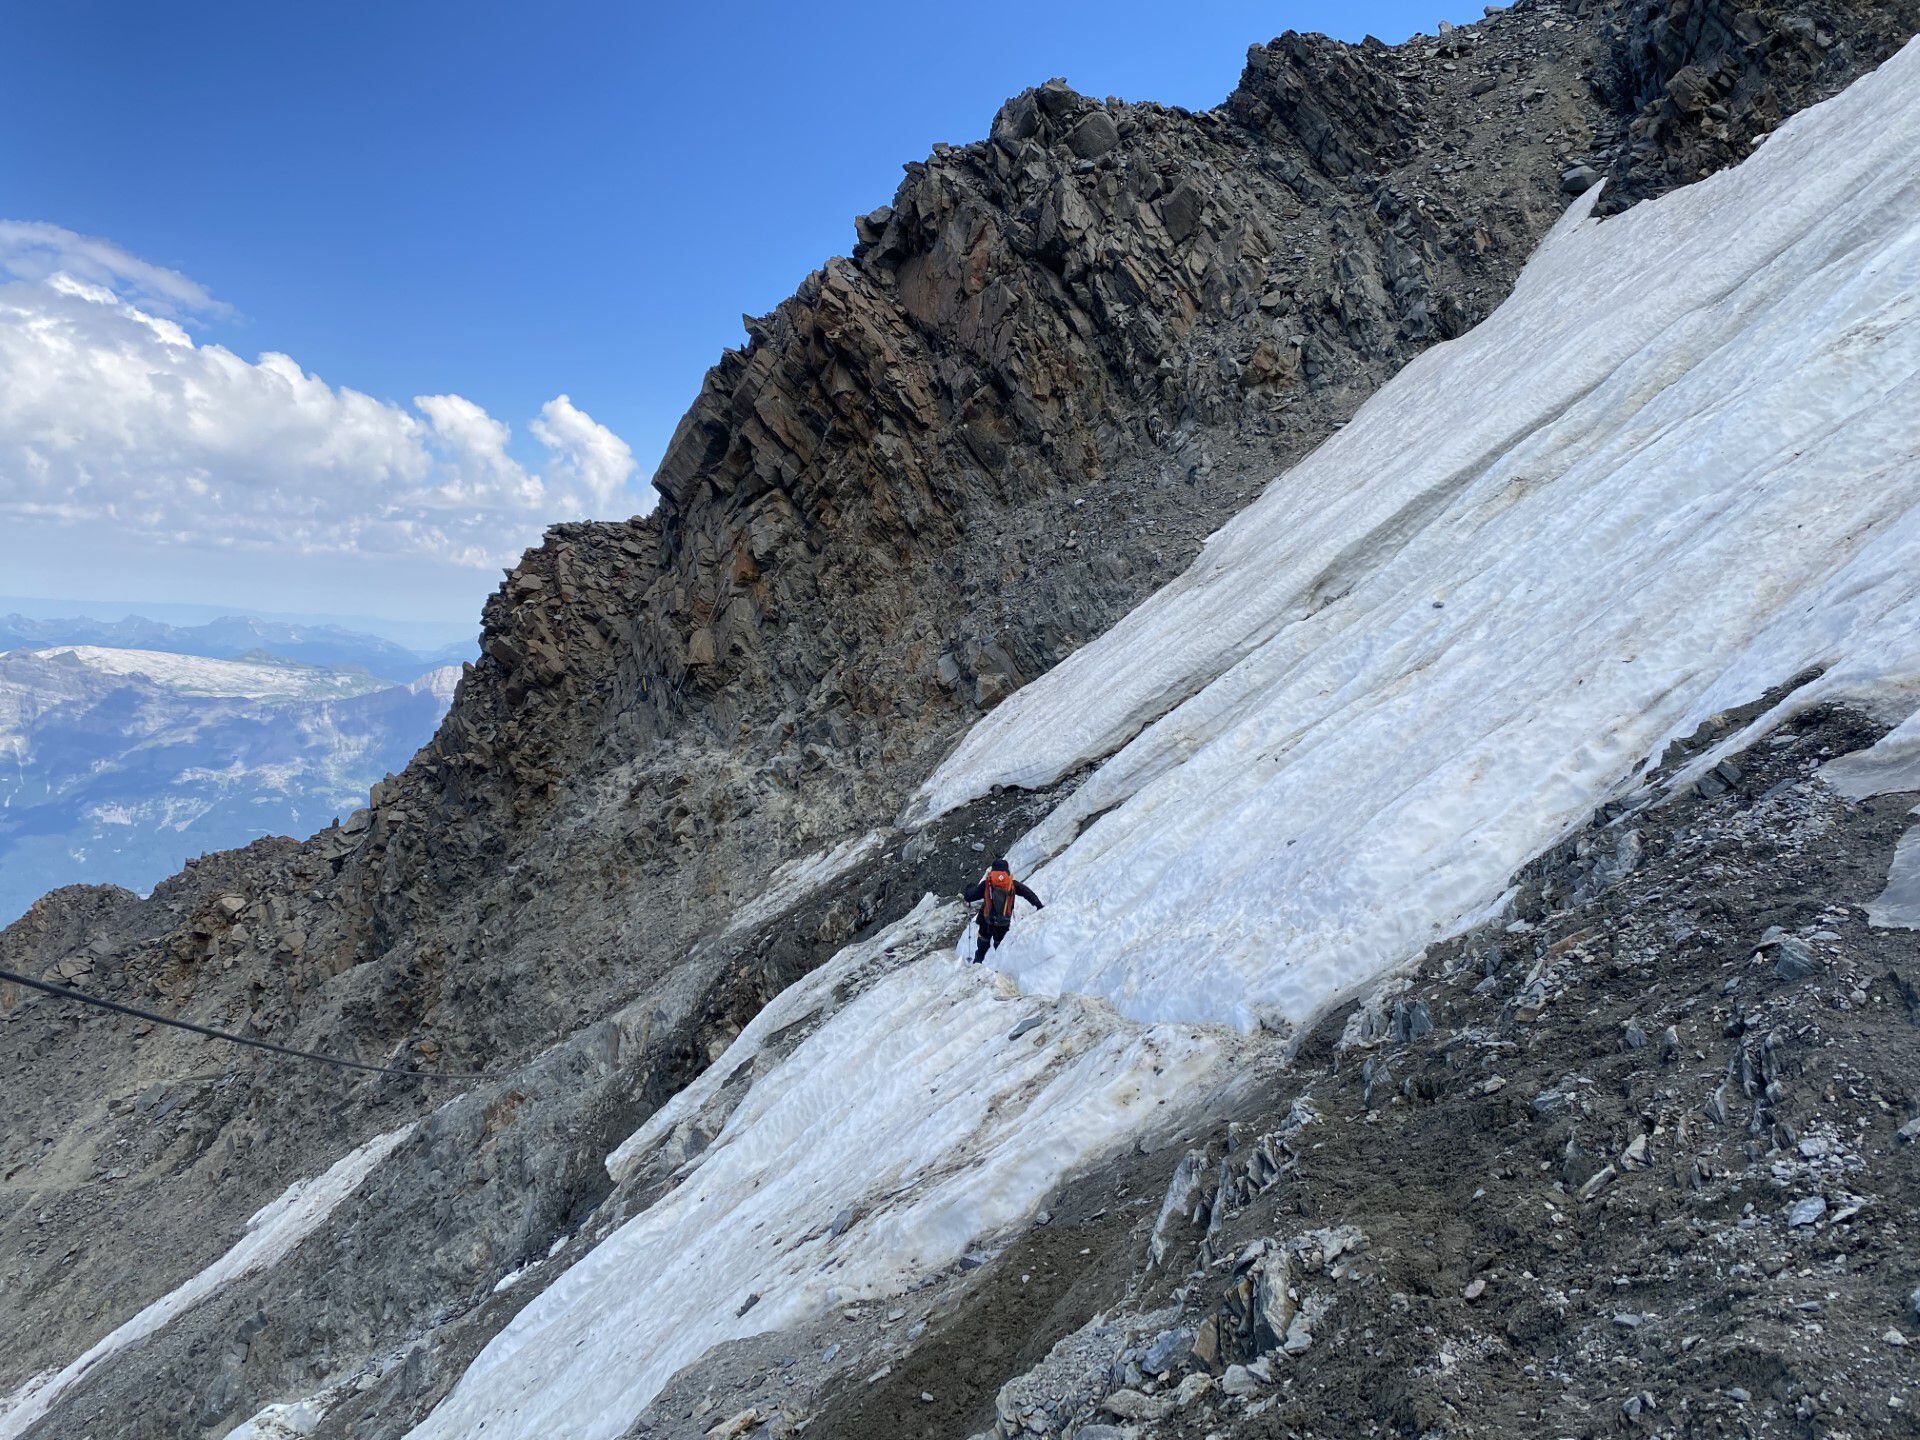 Un alpinista cruza la ‘bolera’ en dirección a la cumbre del Mont Blanc.